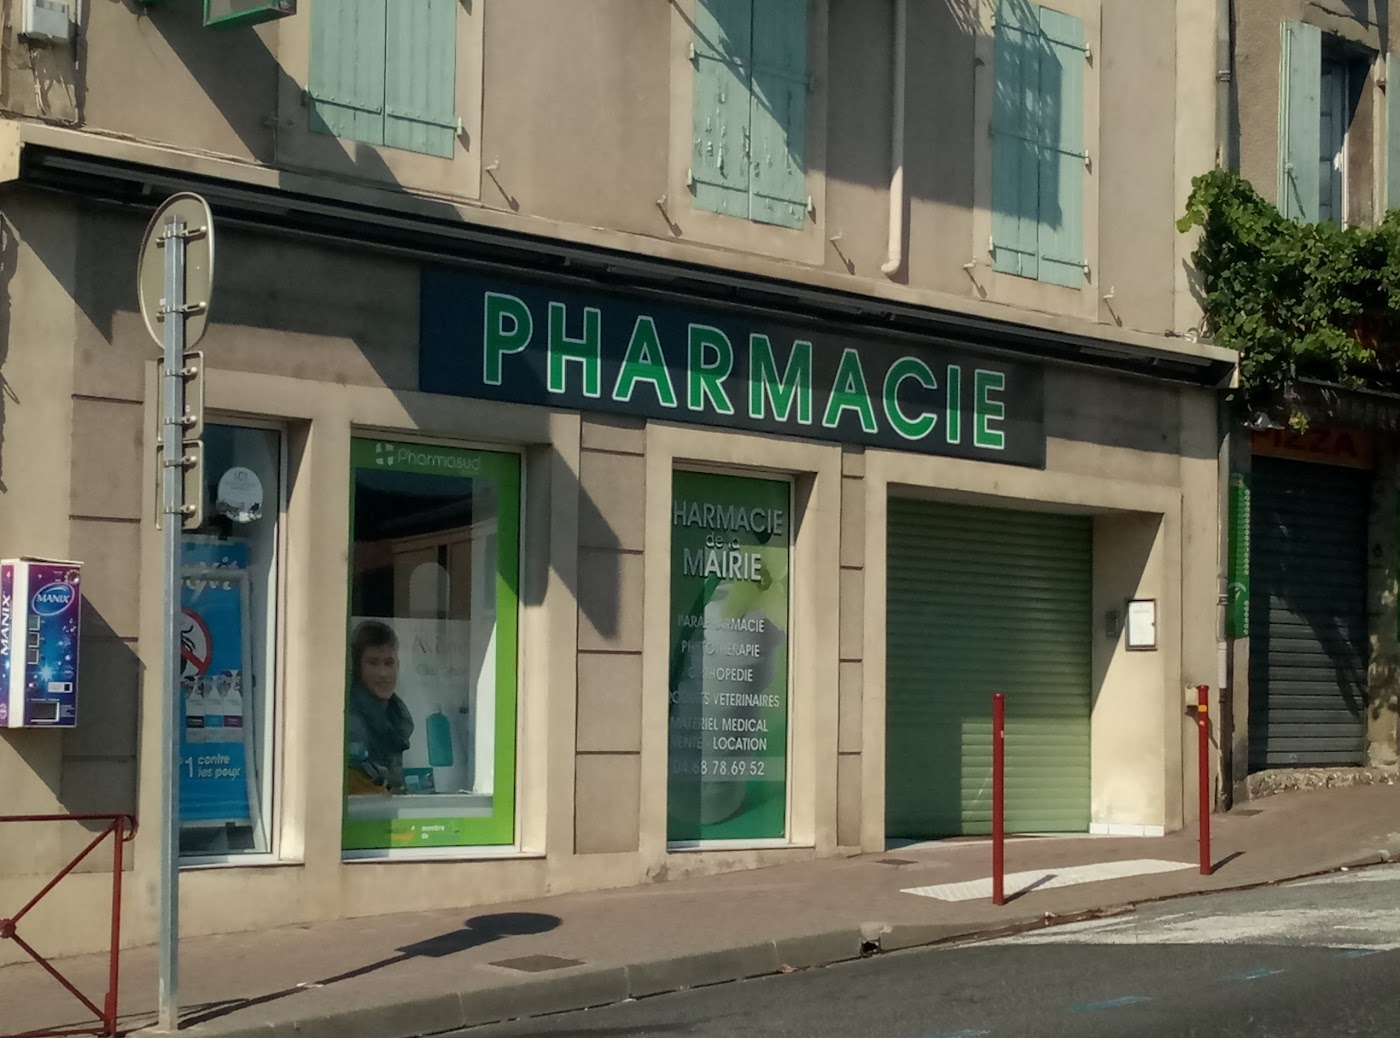 Pharmacie de la Mairie